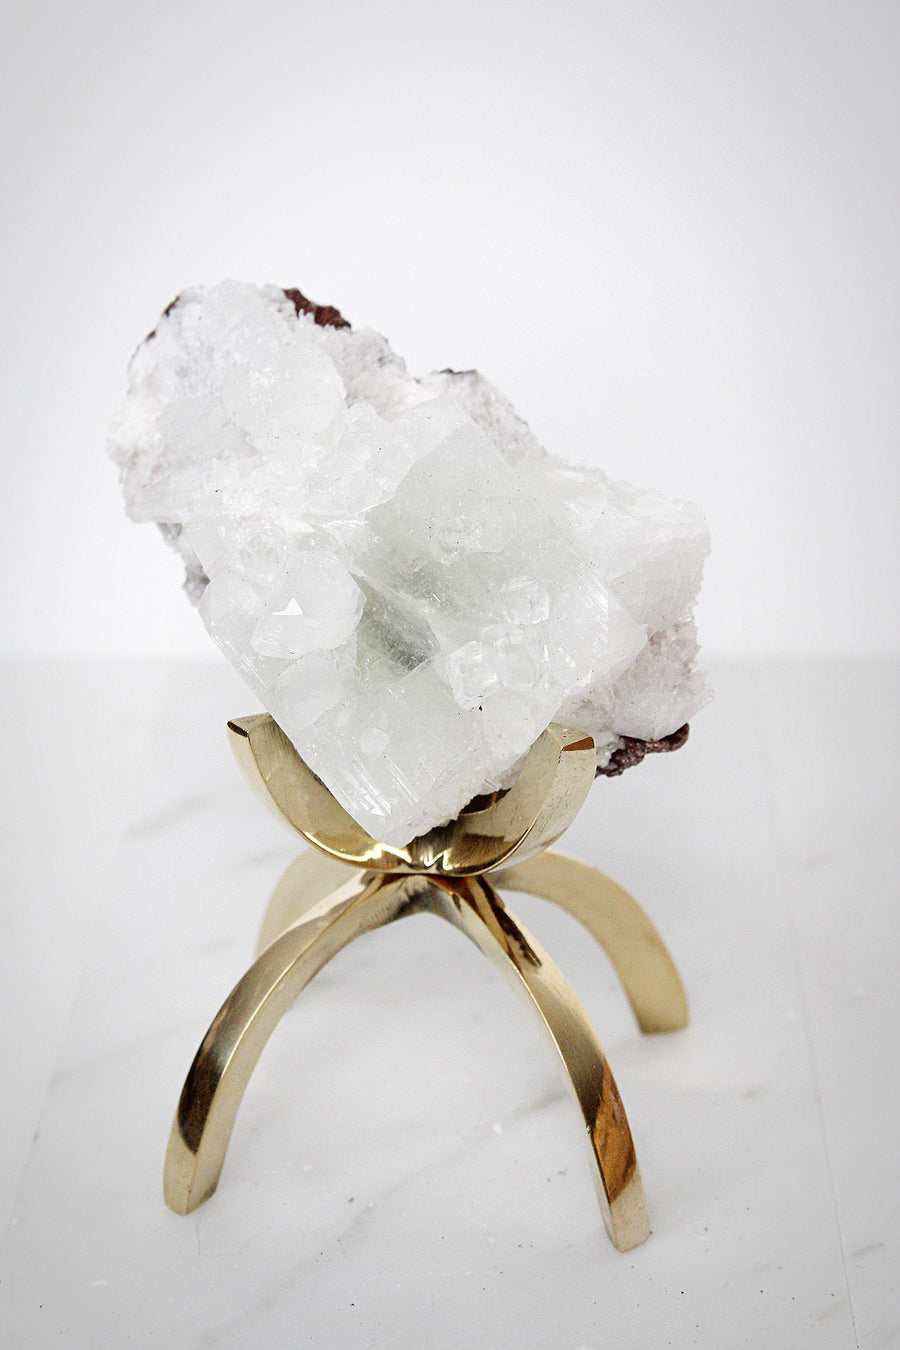 Apophyllite Quartz Crystal Mineral on Brass Modern Claw Display Stand | Boho Decor